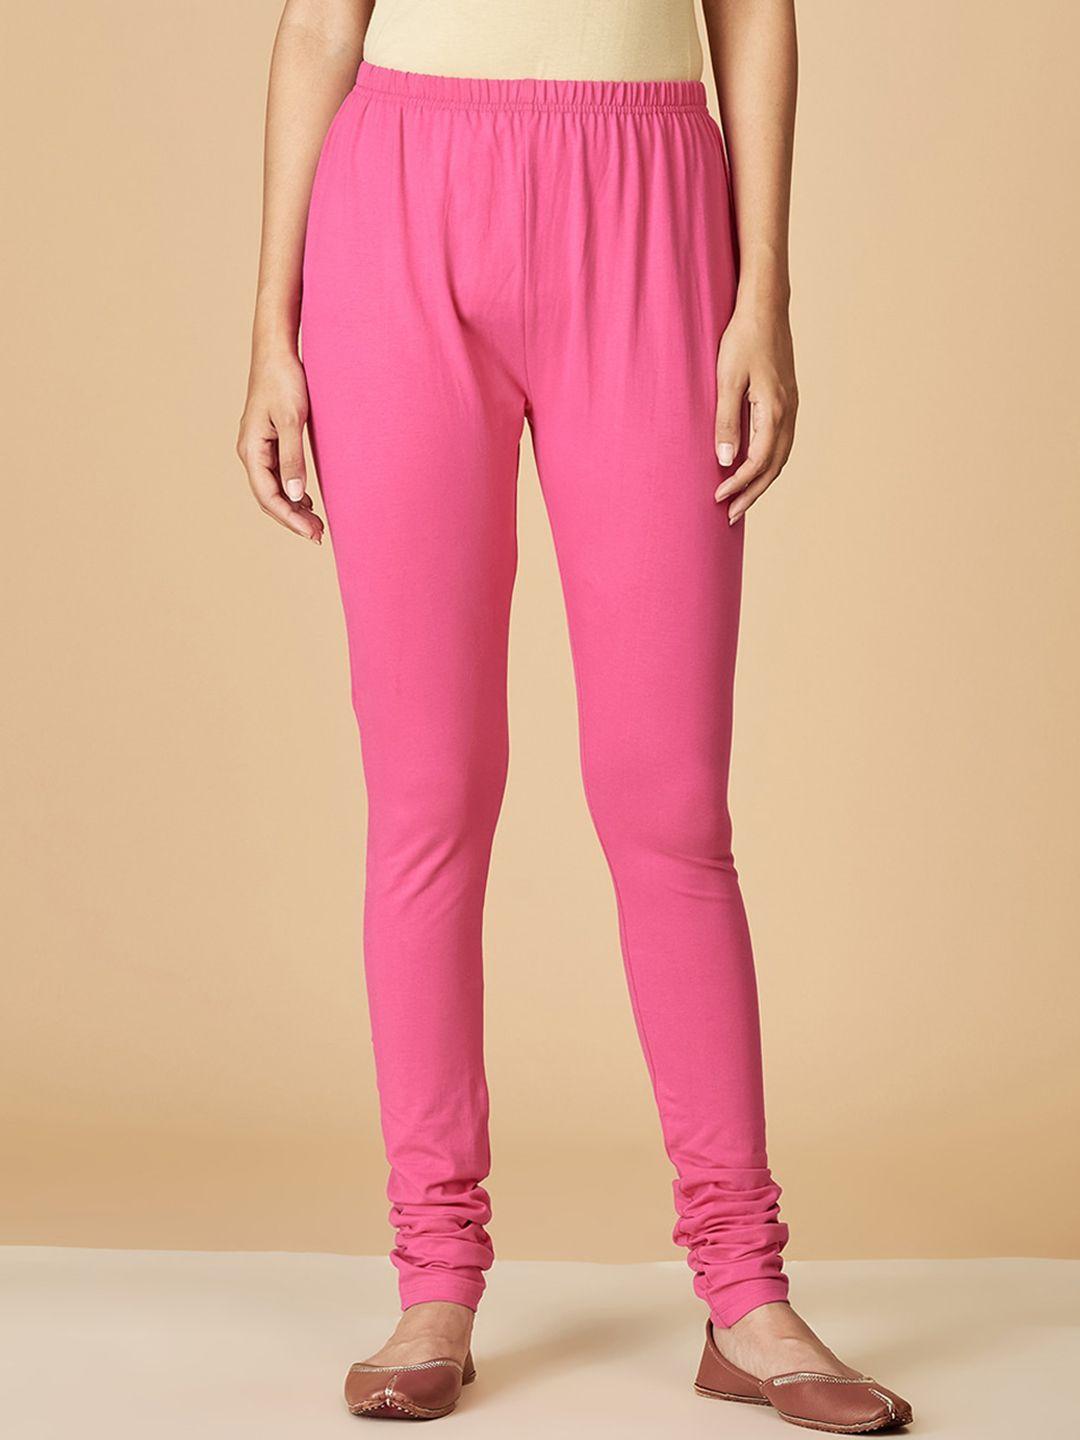 fabindia-pink-churidar-length-cotton-leggings